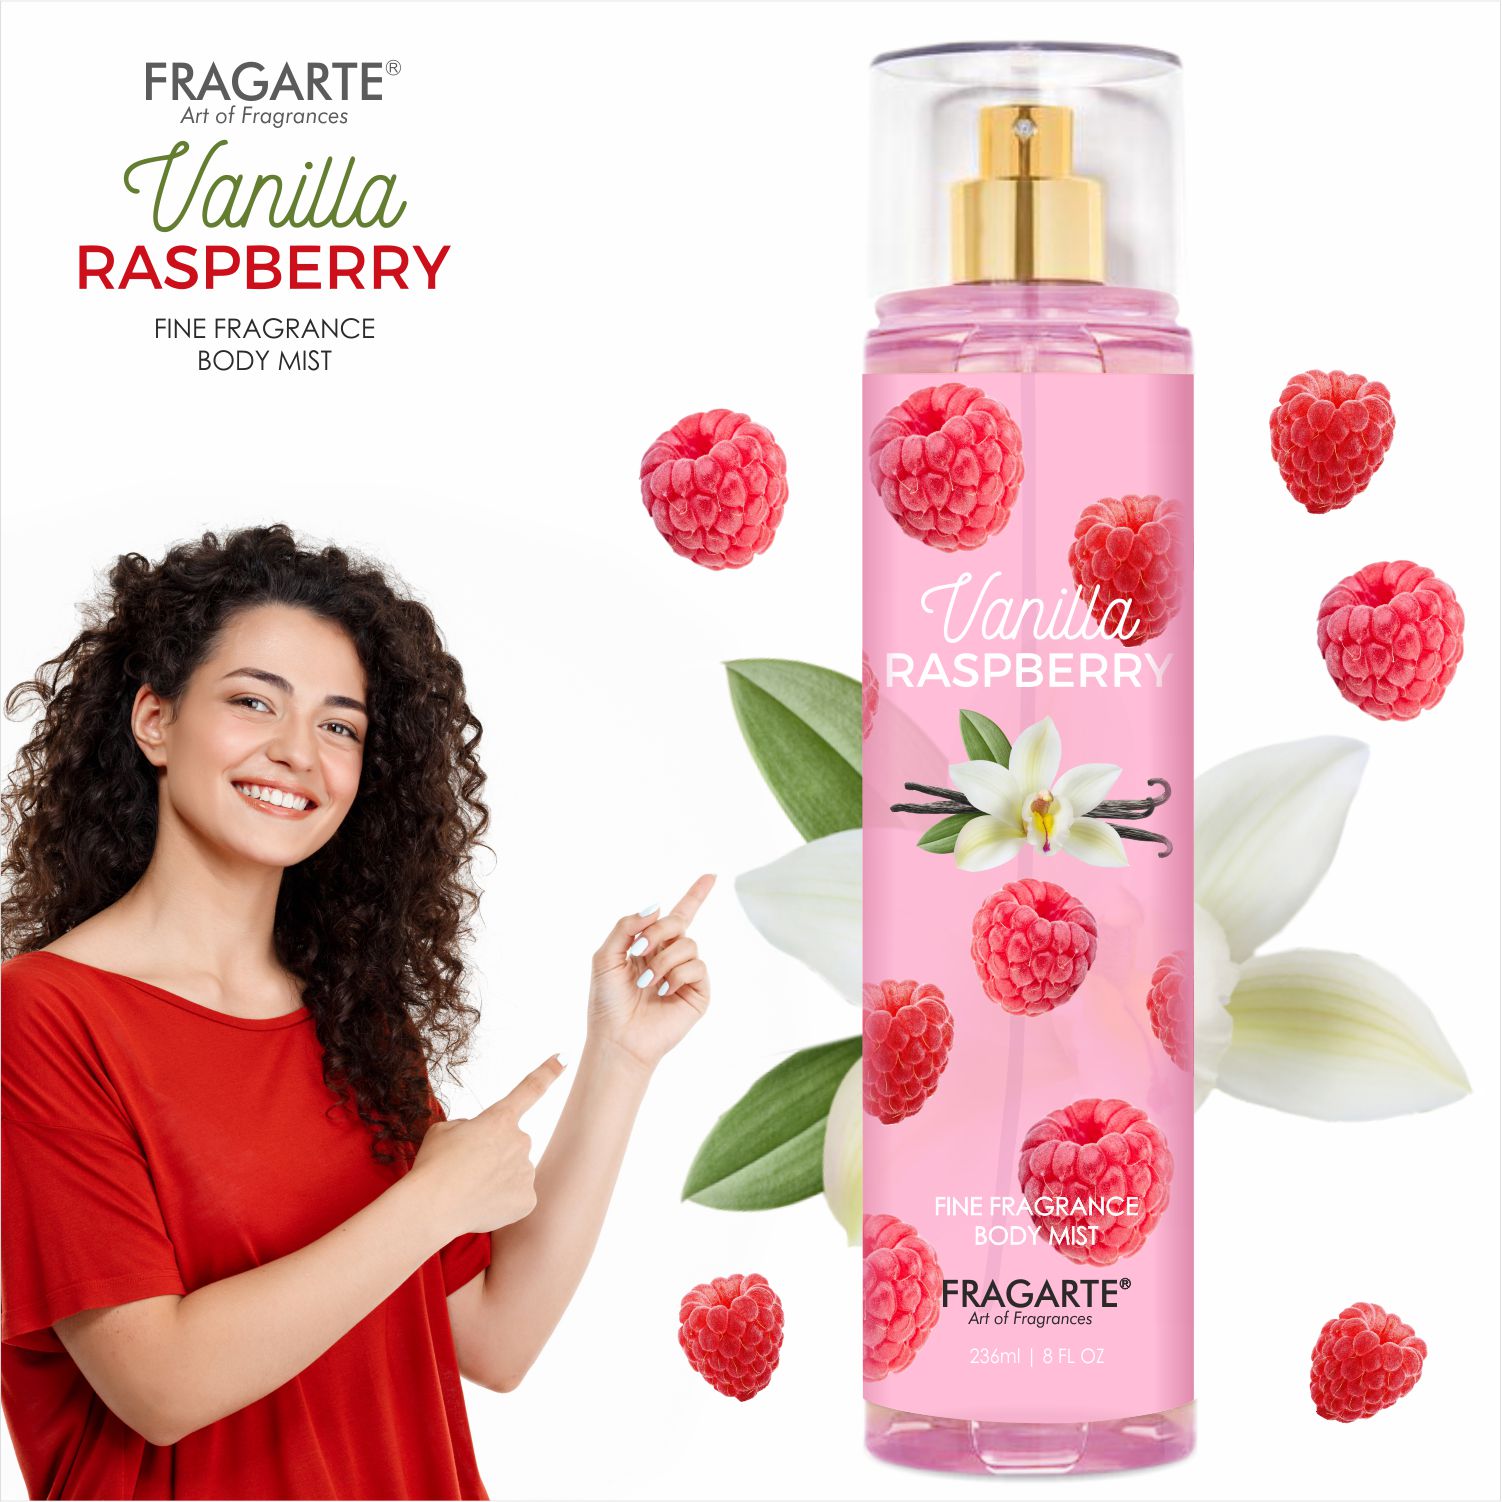 Fragarte Body Mist Vanilla Raspberry